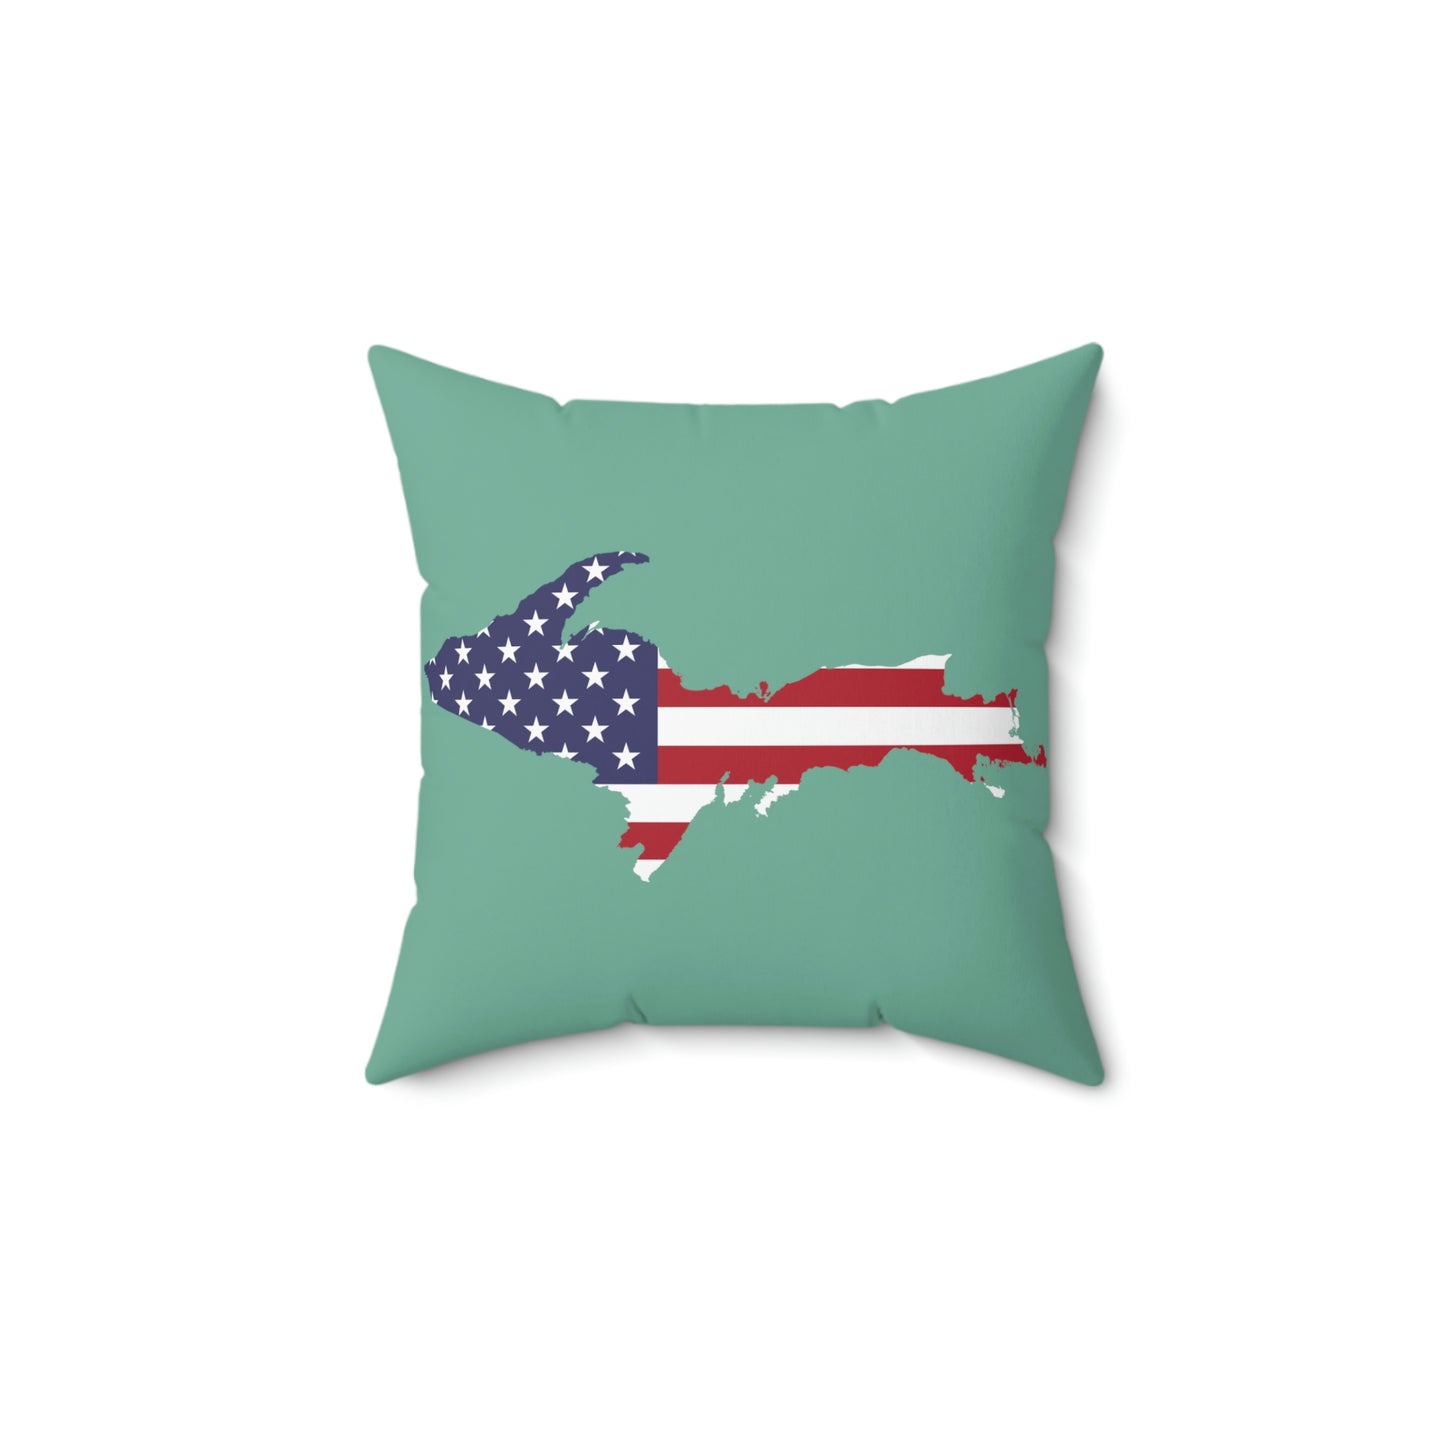 Michigan Upper Peninsula Accent Pillow (w/ UP USA Flag Outline) | '64 Metallic Mint Green